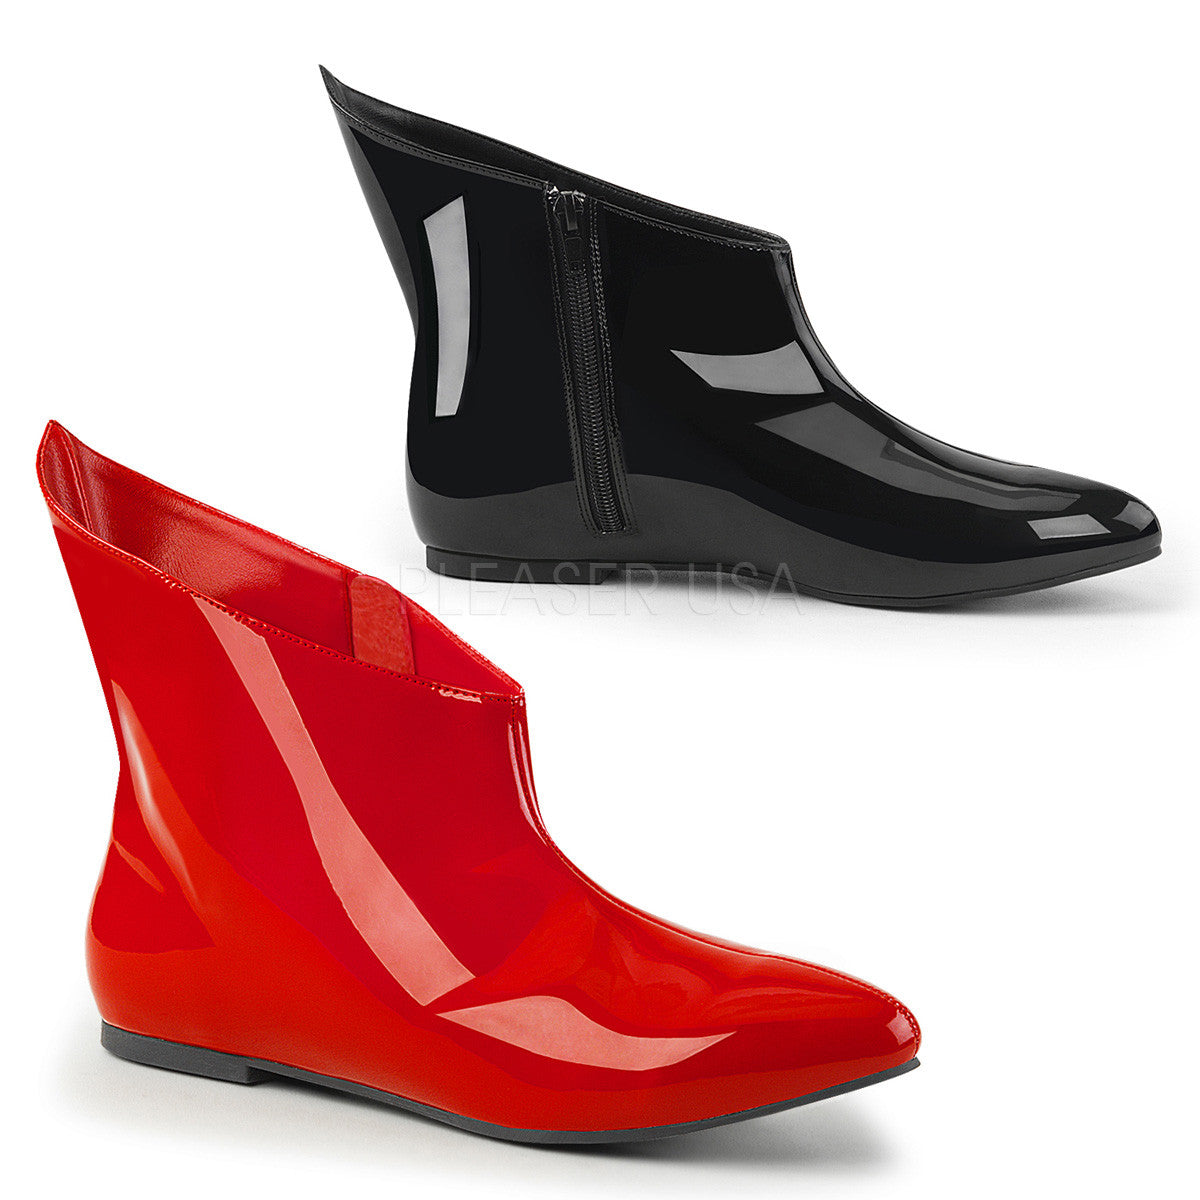 Funtasma VAIL-152HQ Black and Red Villain Boots - Shoecup.com - 1